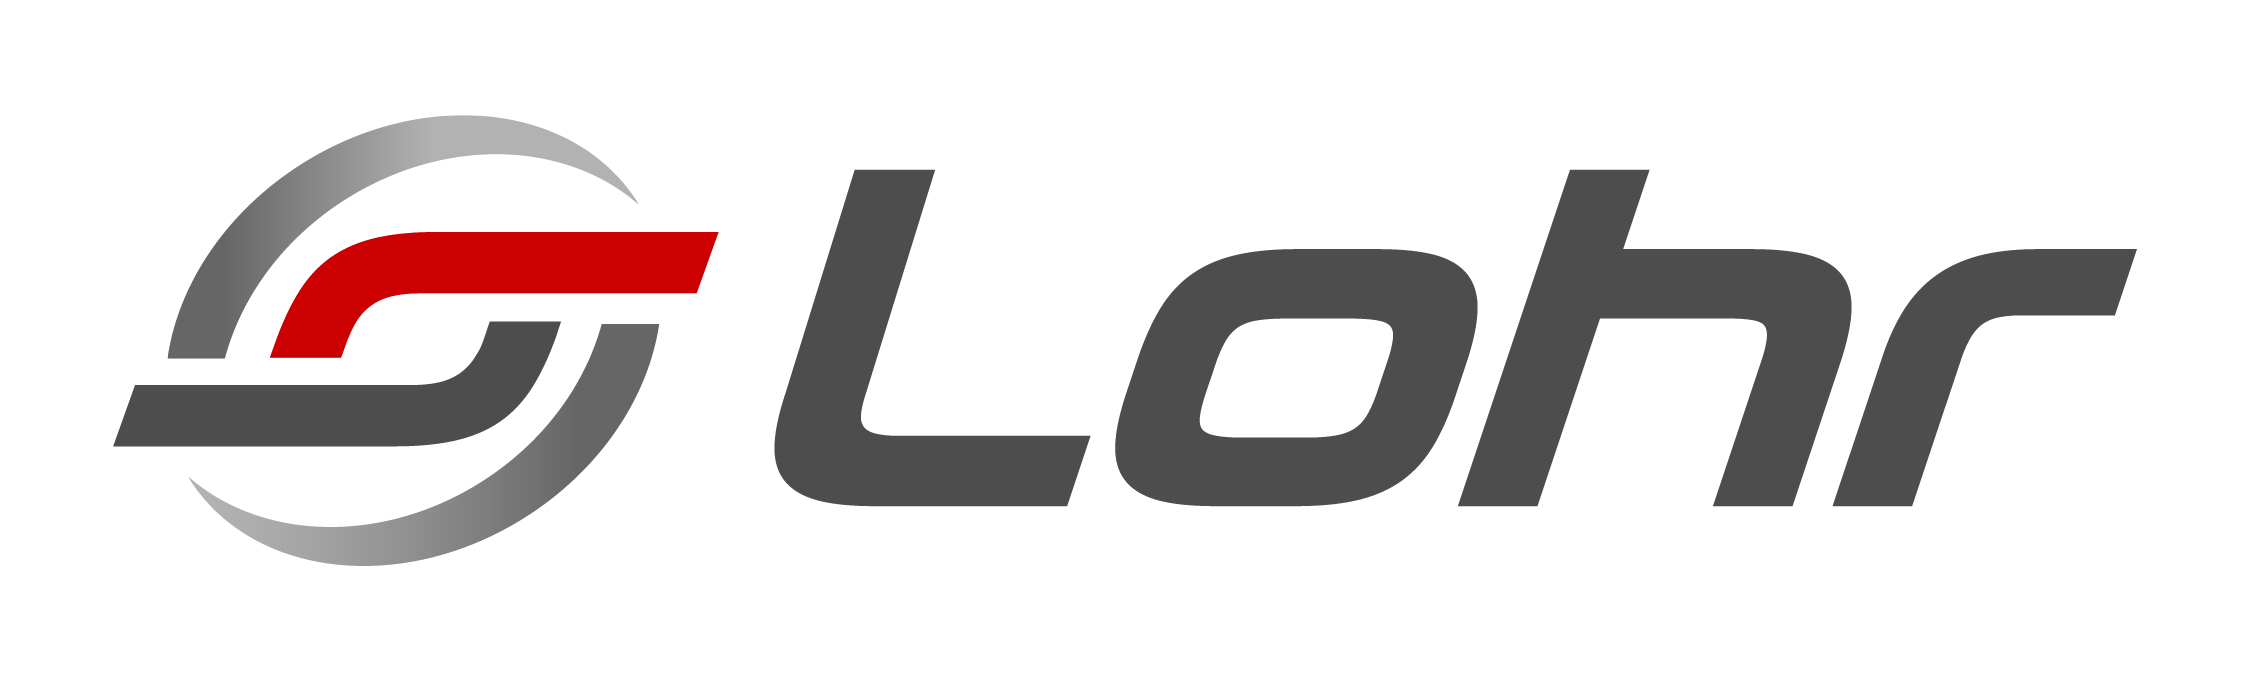 Logo Lohr